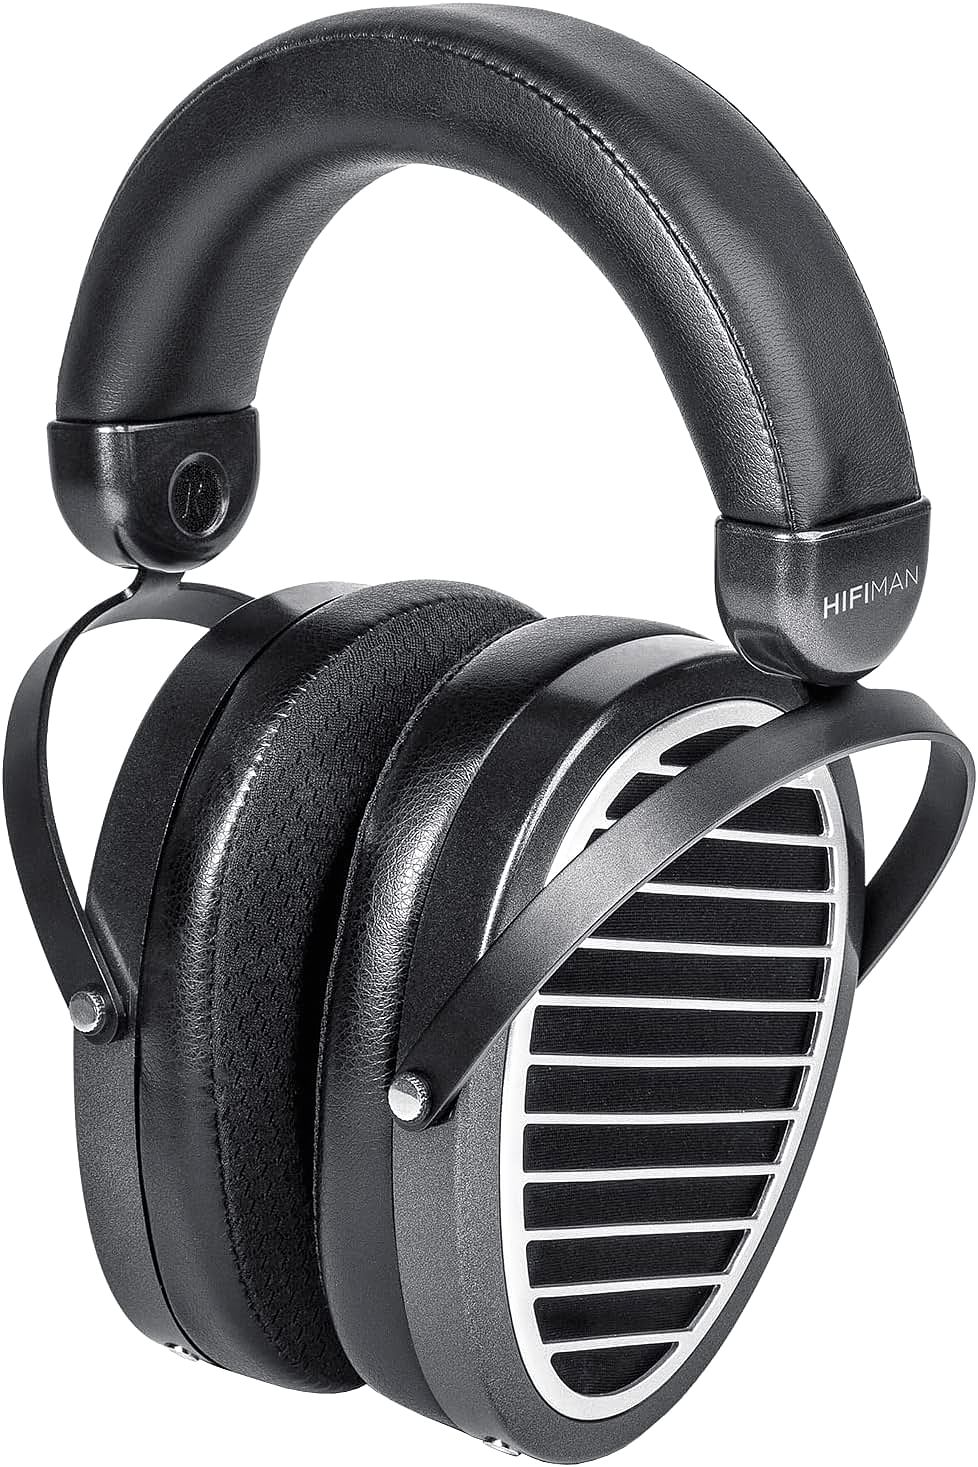  HIFIMAN Edition XS Full-Size Over-Ear Open-Back Planar Magnetic Hi-Fi Headphones 